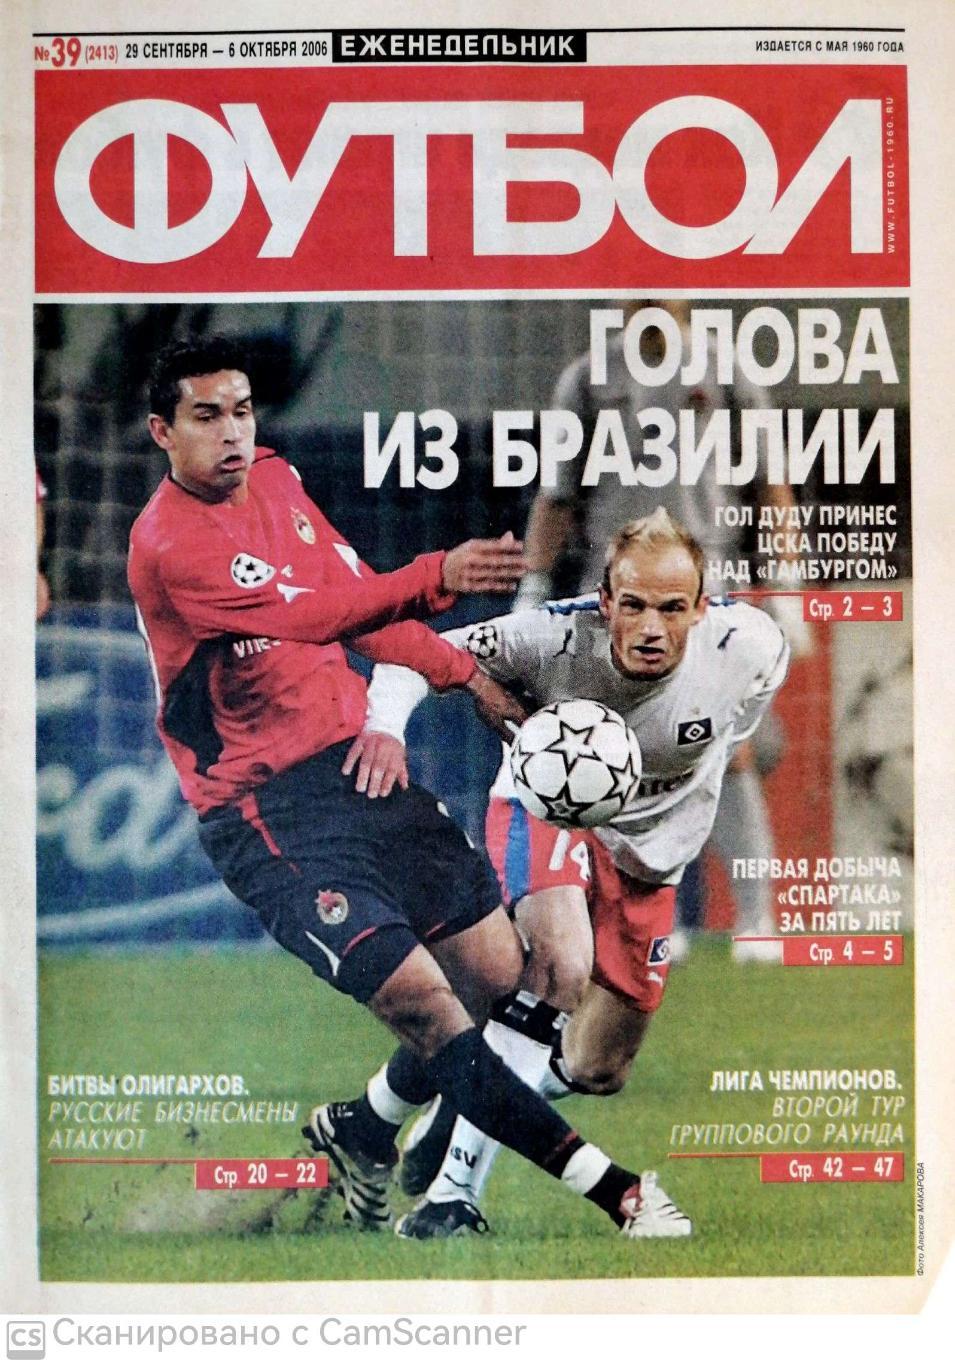 Еженедельник «Футбол» (Москва). 2006 год. №39